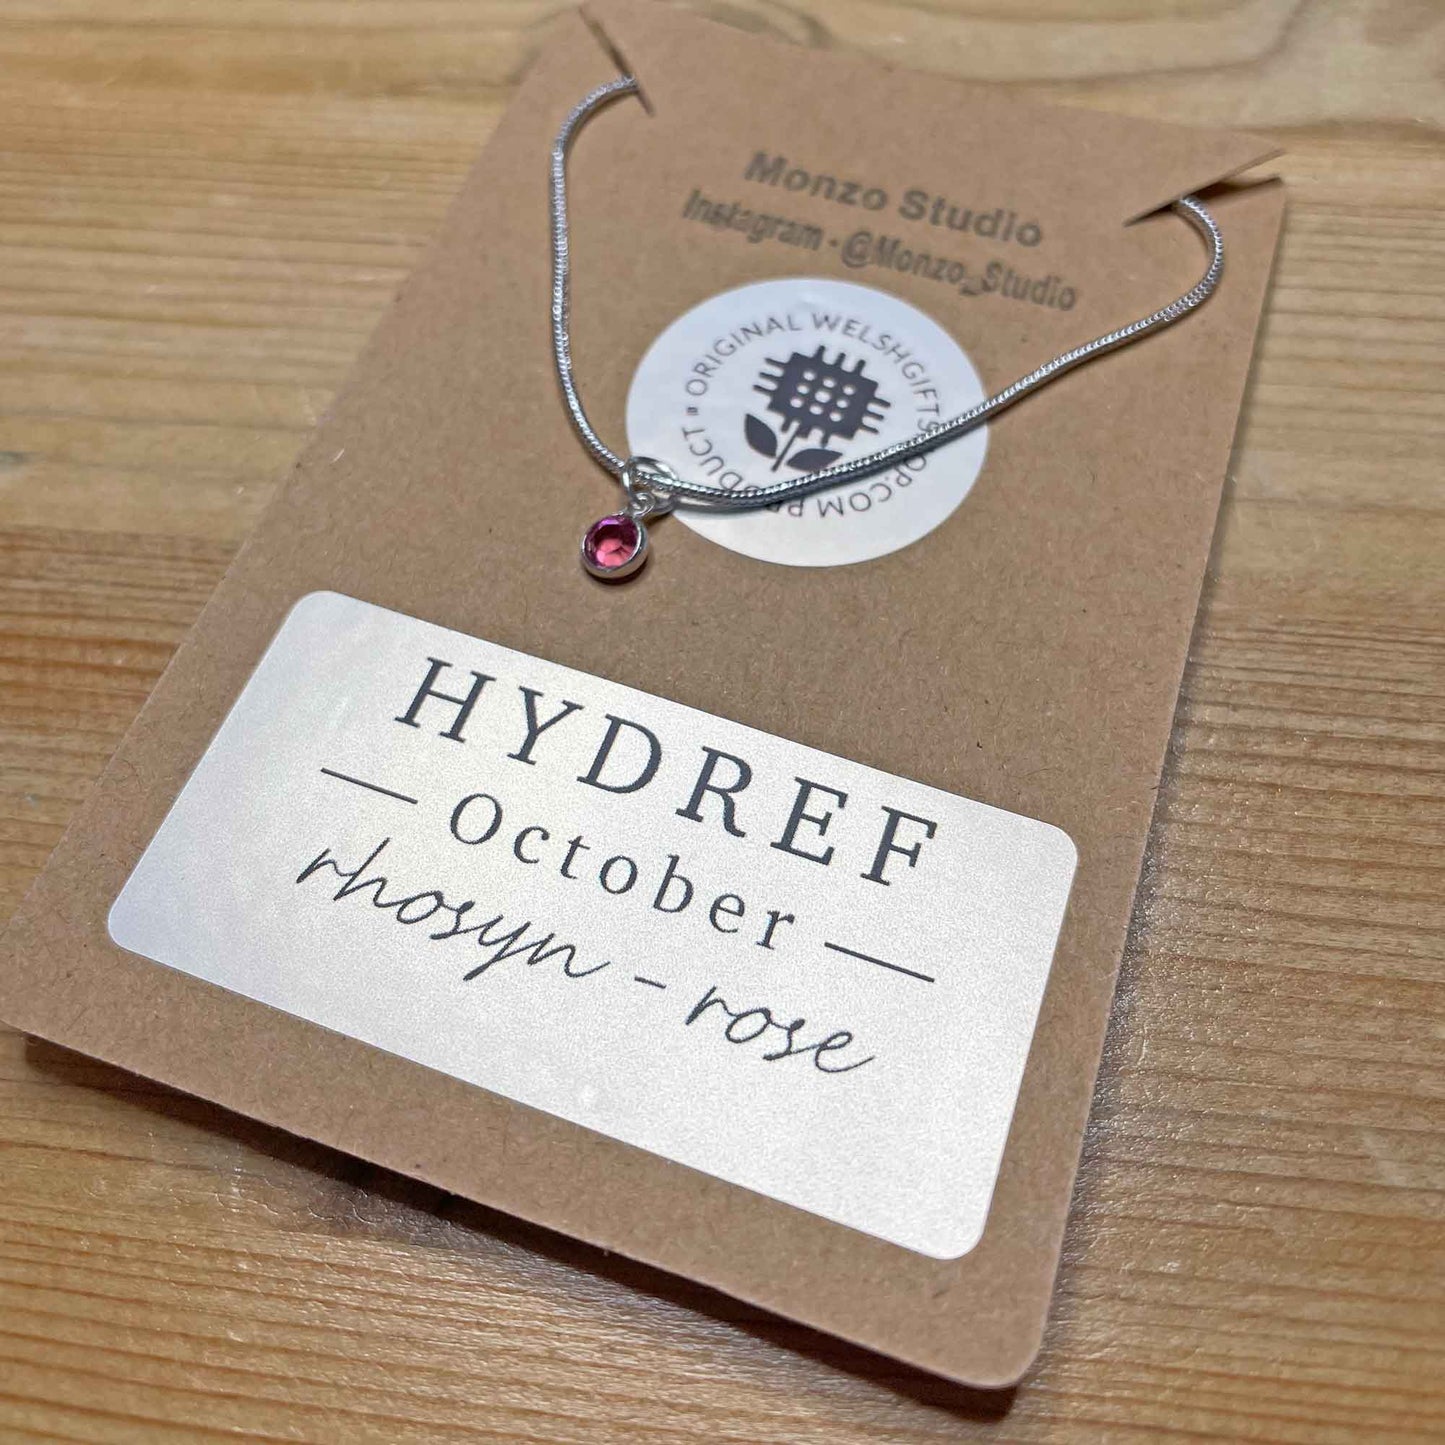 Birthstone Crystal Pendant - Silver Necklace - Welsh Language - October / Rose